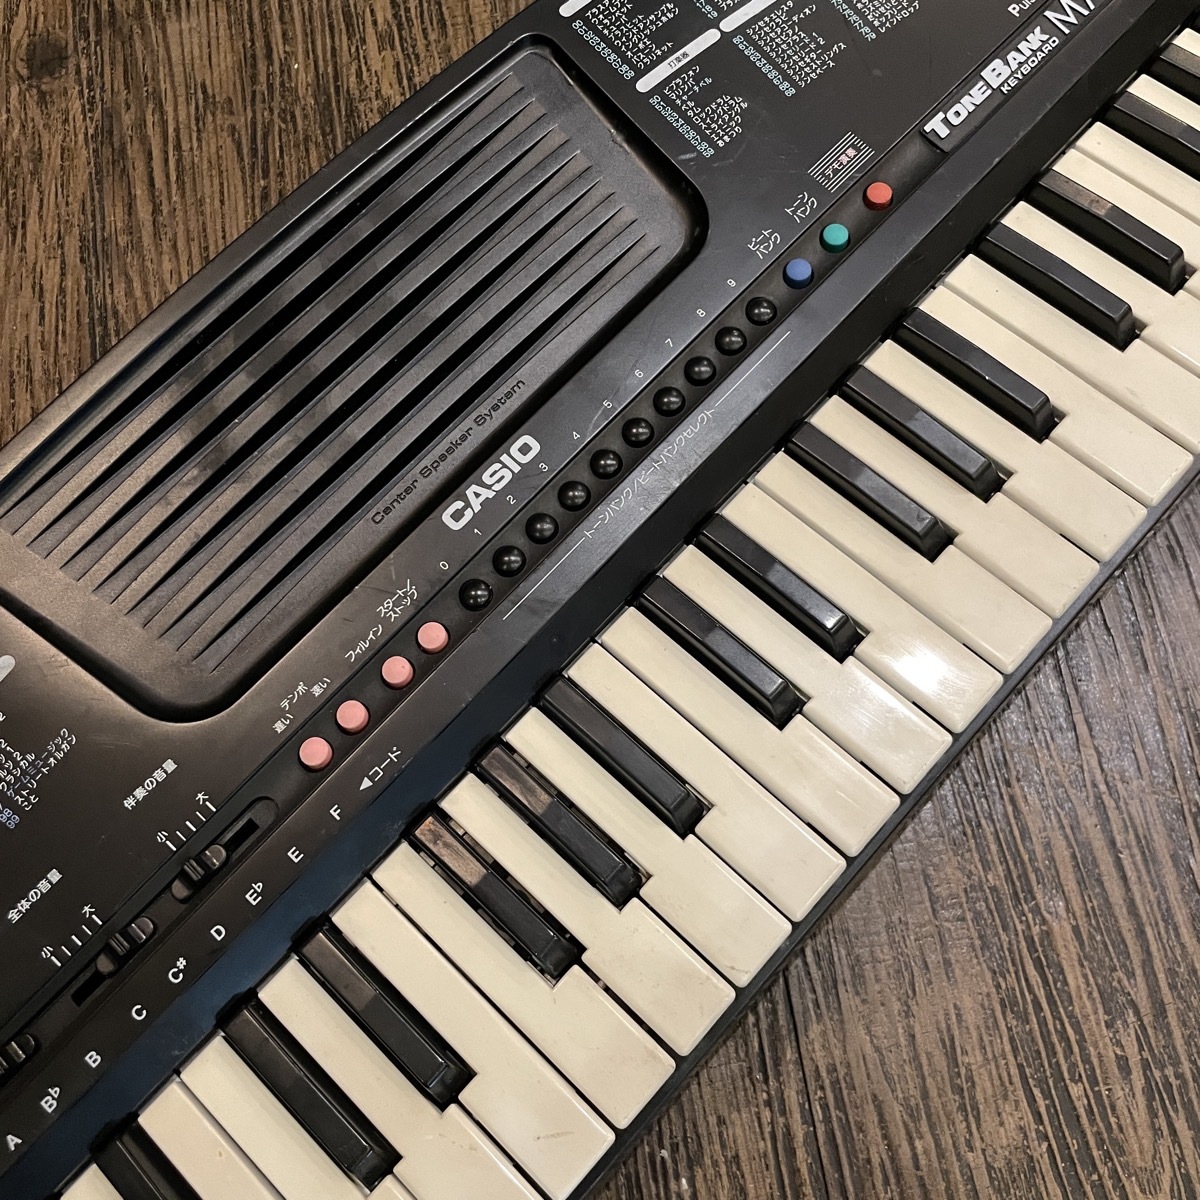 Casio MA-120 Tone Bank Keyboard keyboard Casio Junk - f985